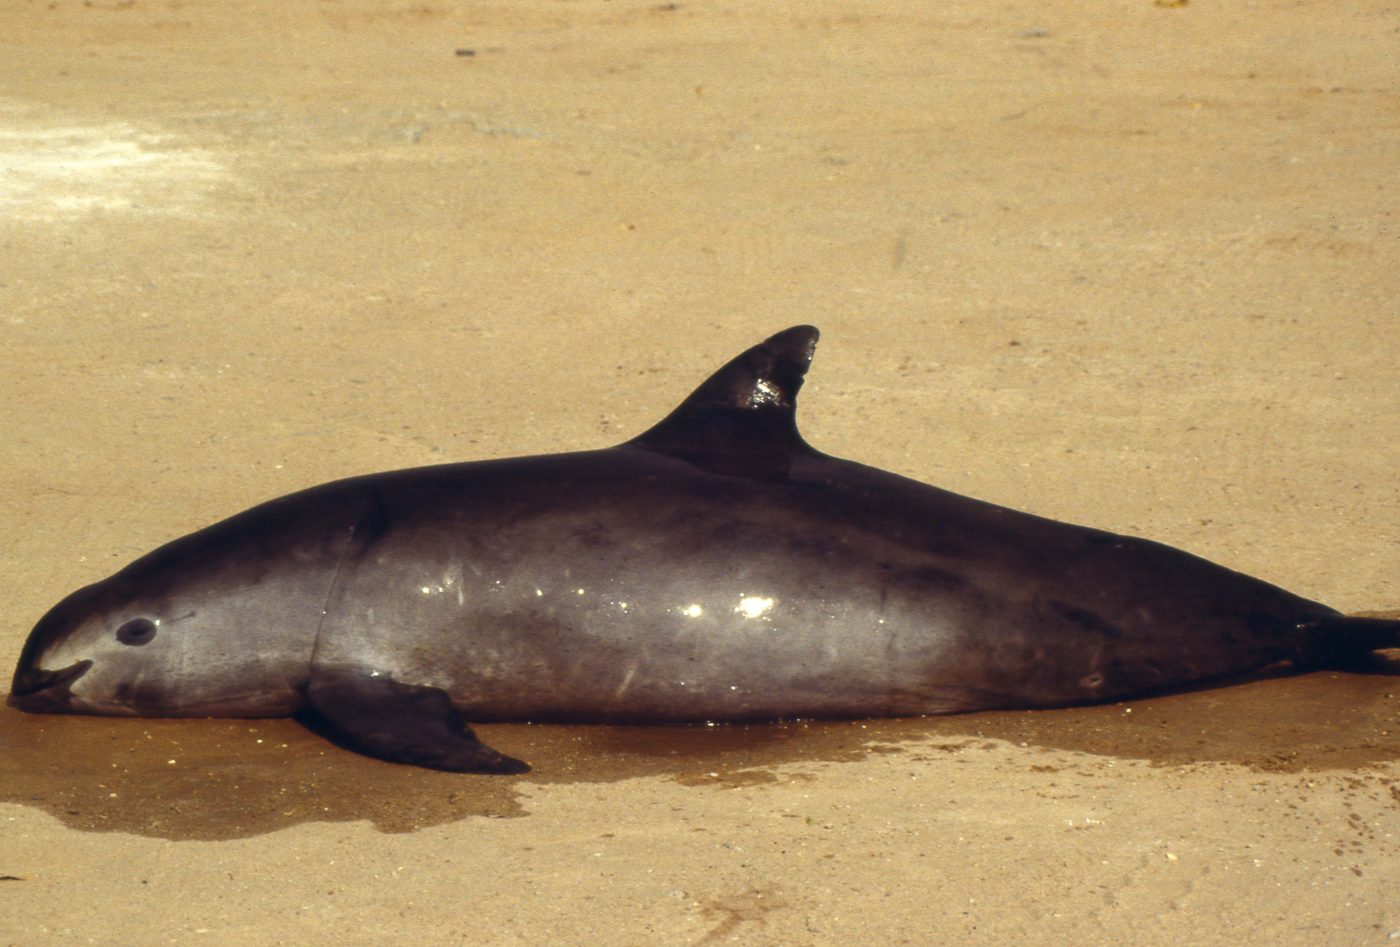 El hábitat de la vaquita marina declarado Patrimonio Mundial en peligro